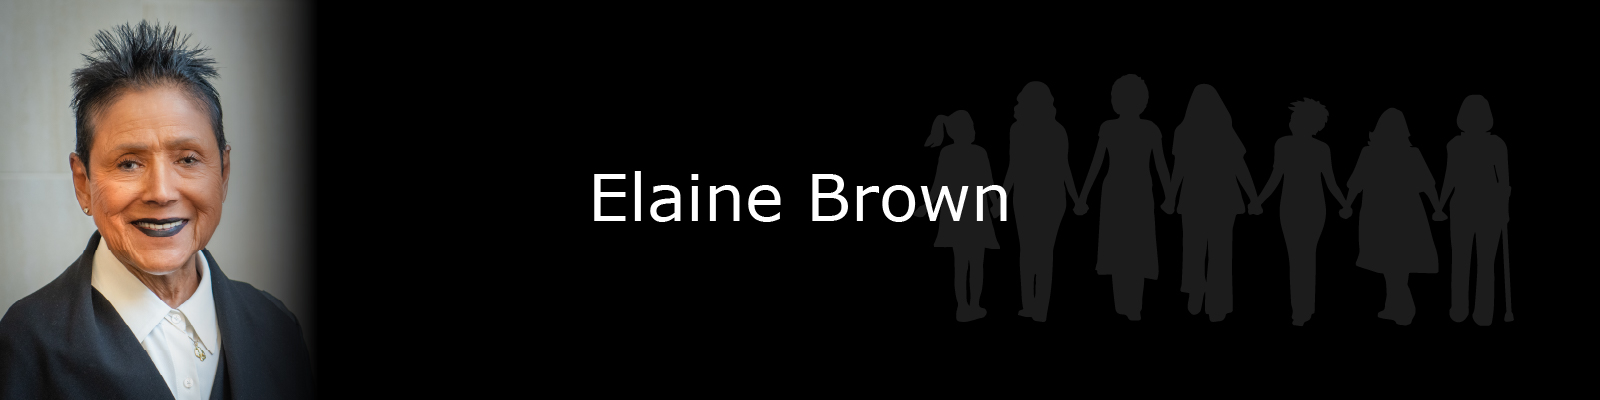 Photo of Elaine Brown.